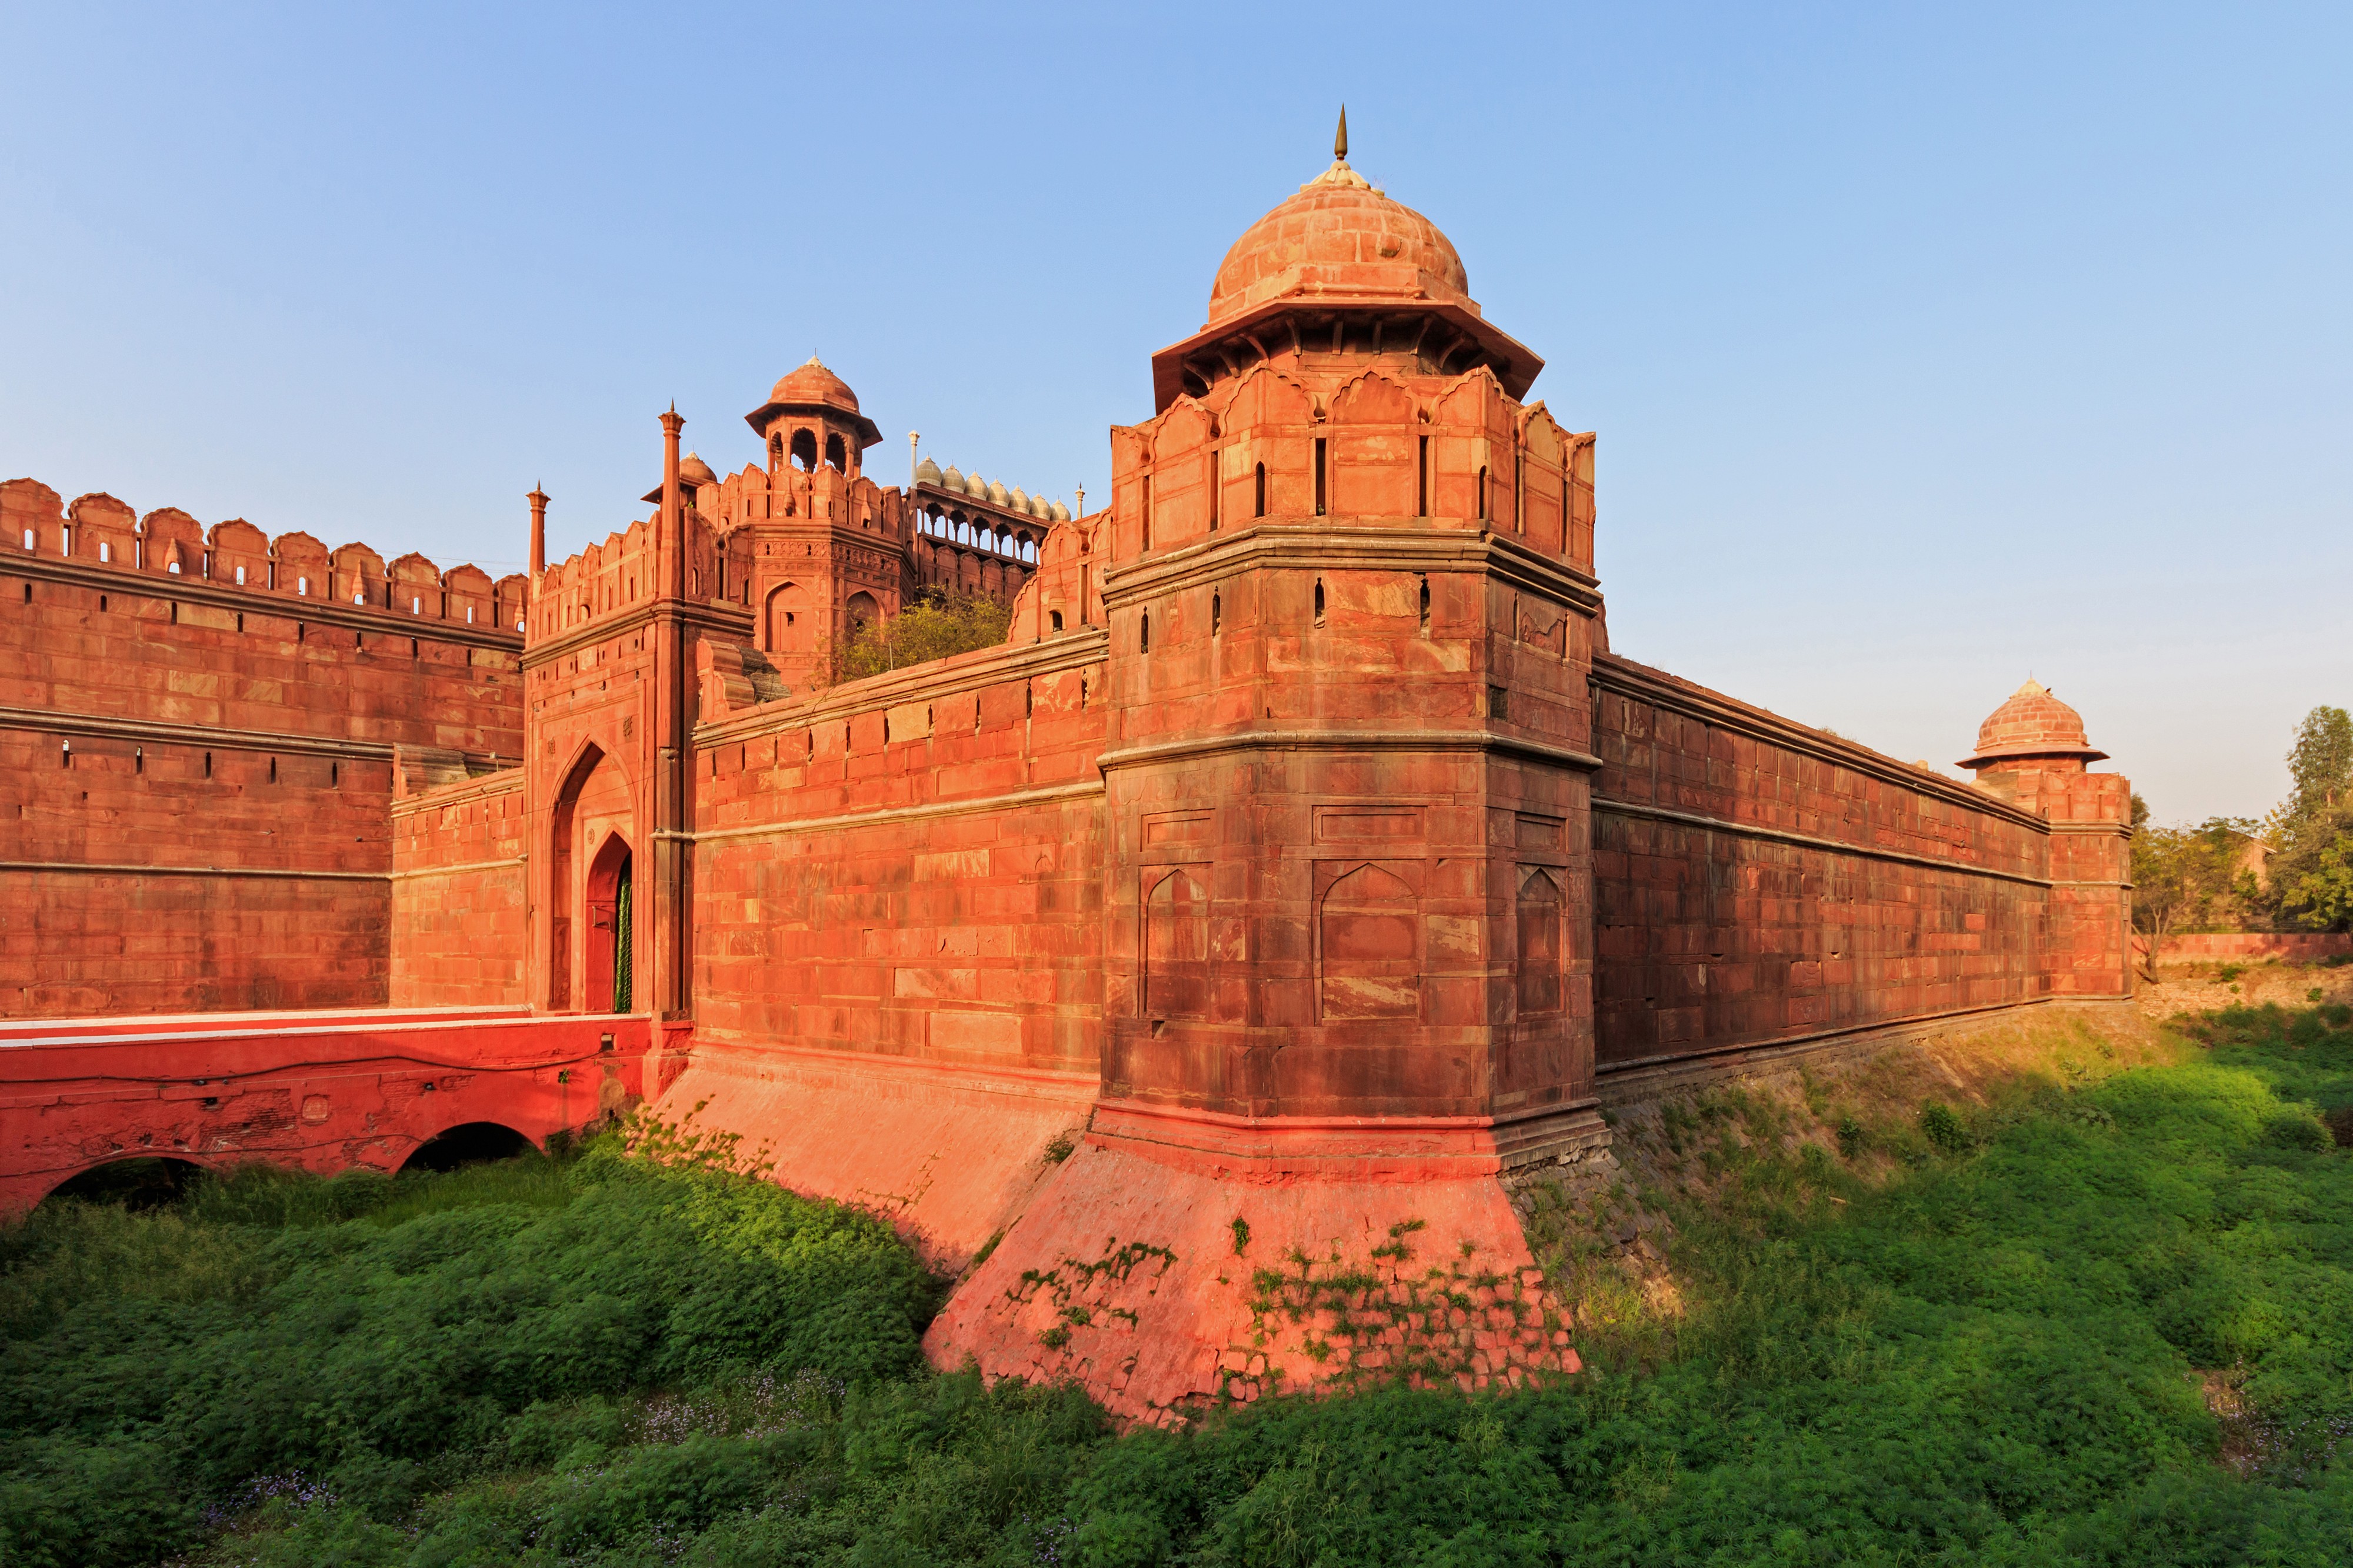 Red Fort in Delhi 03-2016 img1